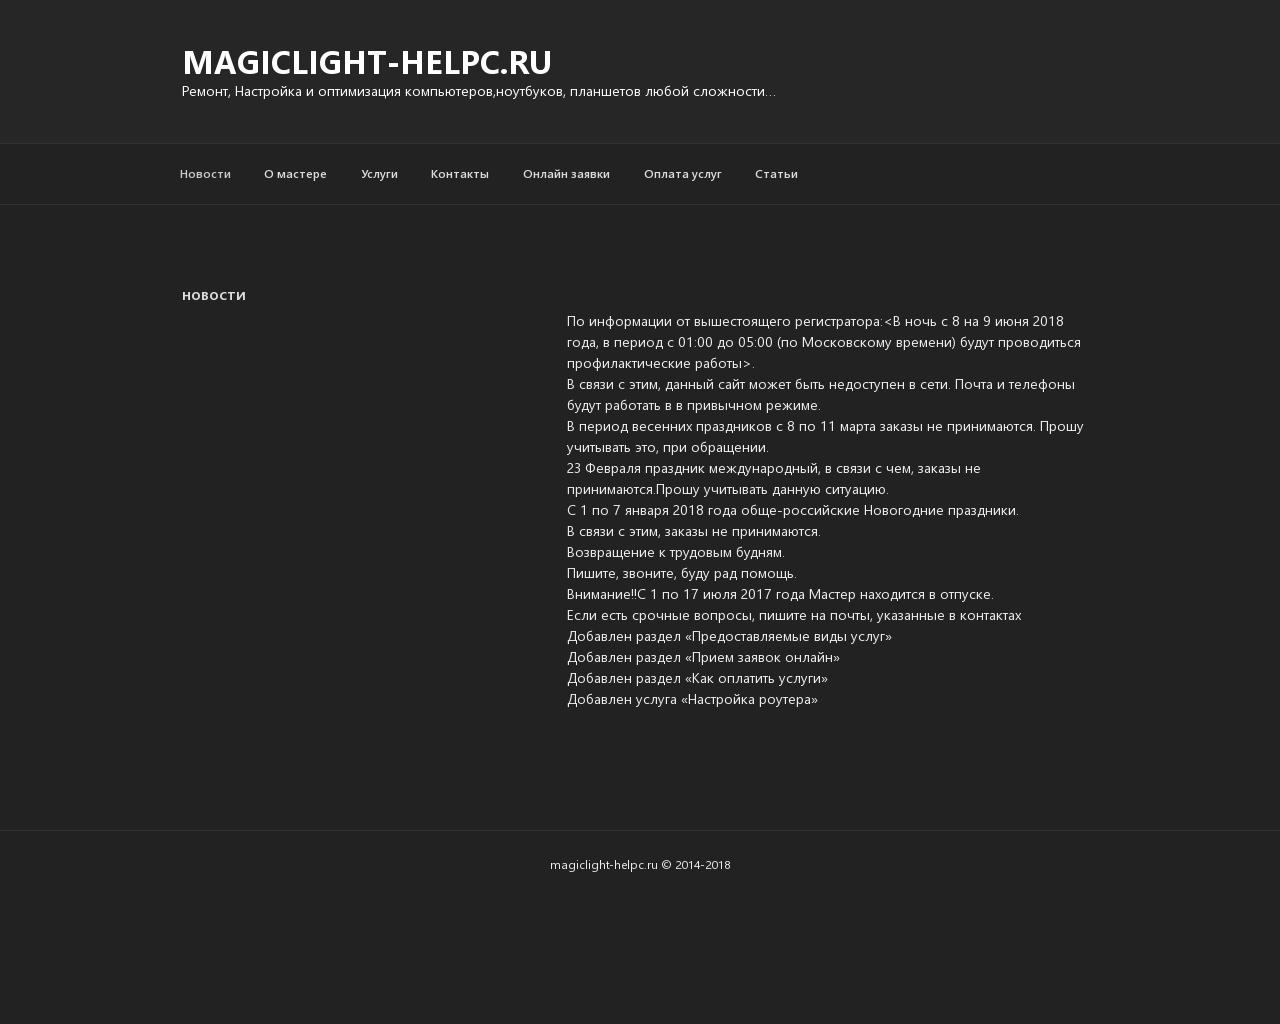 Изображение сайта magiclight-helpc.ru в разрешении 1280x1024